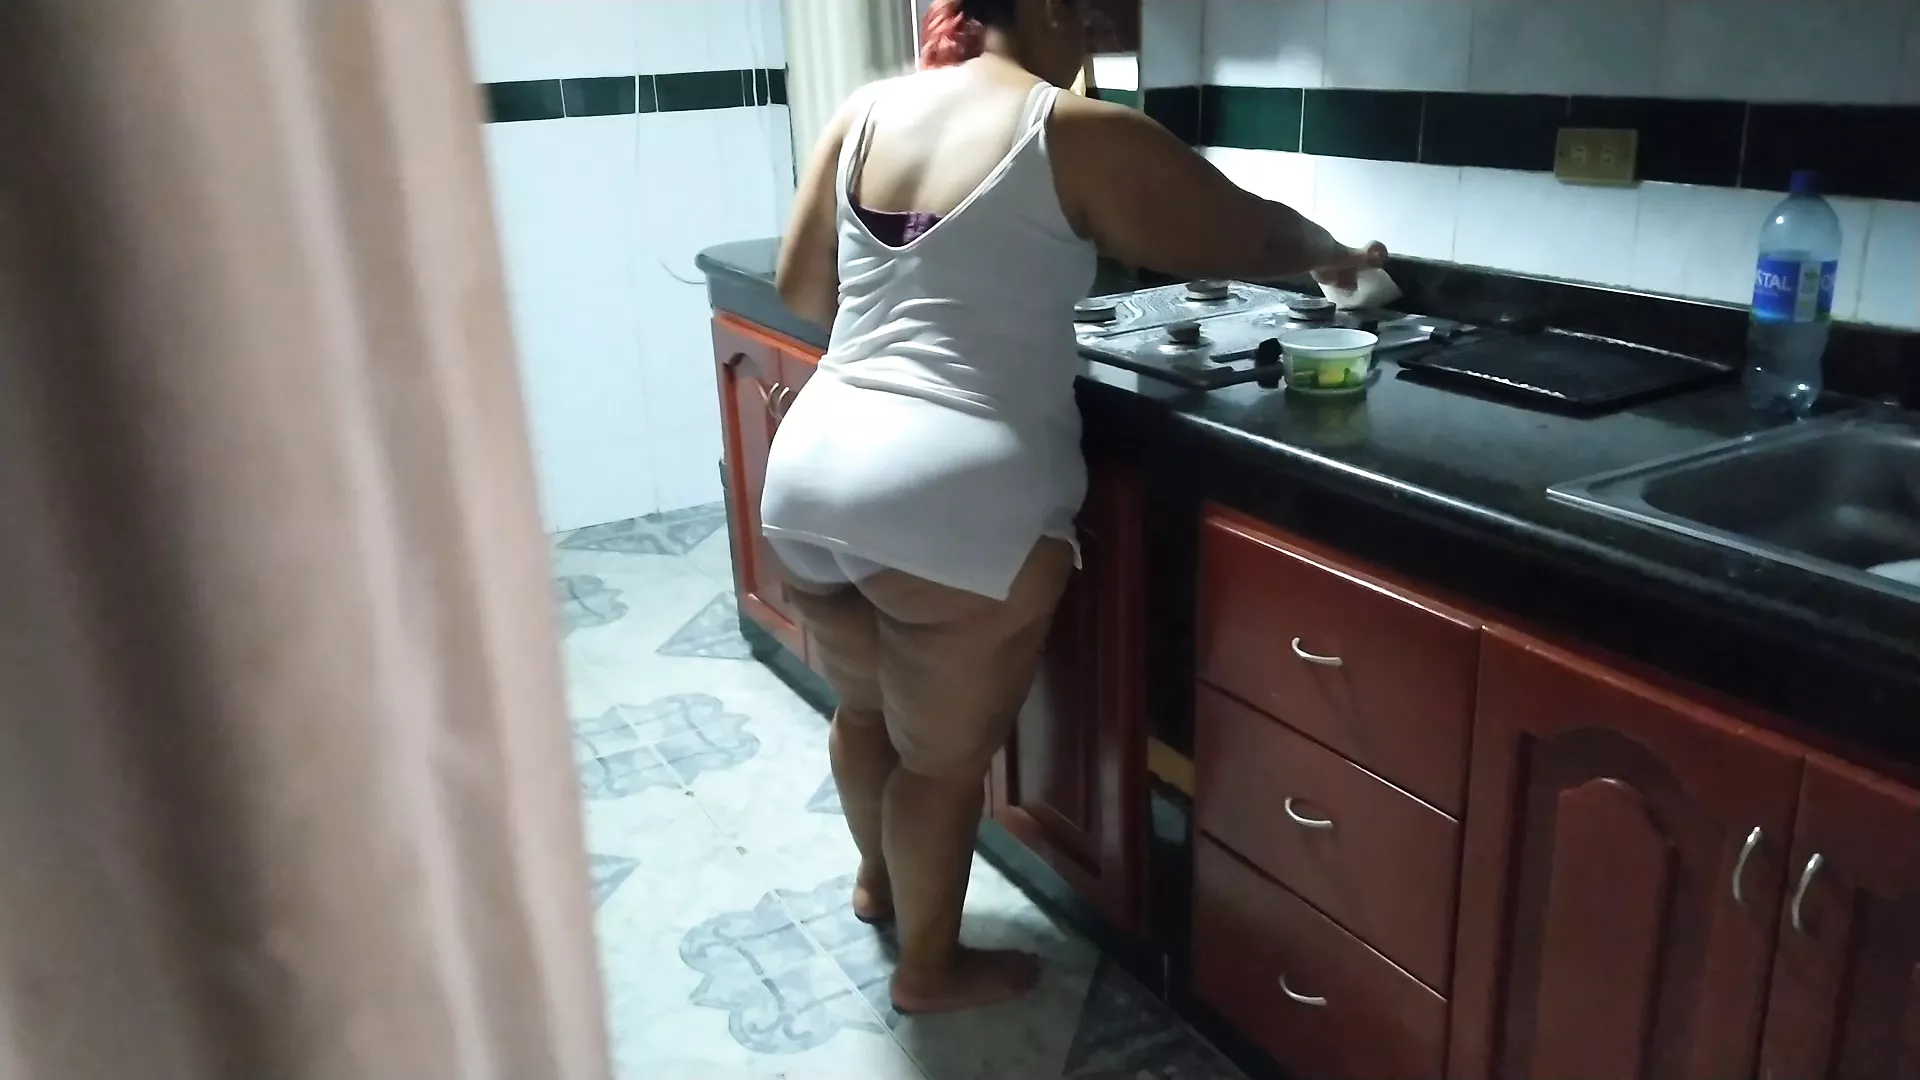 Food Kitchen Masturbation - I masturbate while my friend's mom cleans the kitchen | xHamster